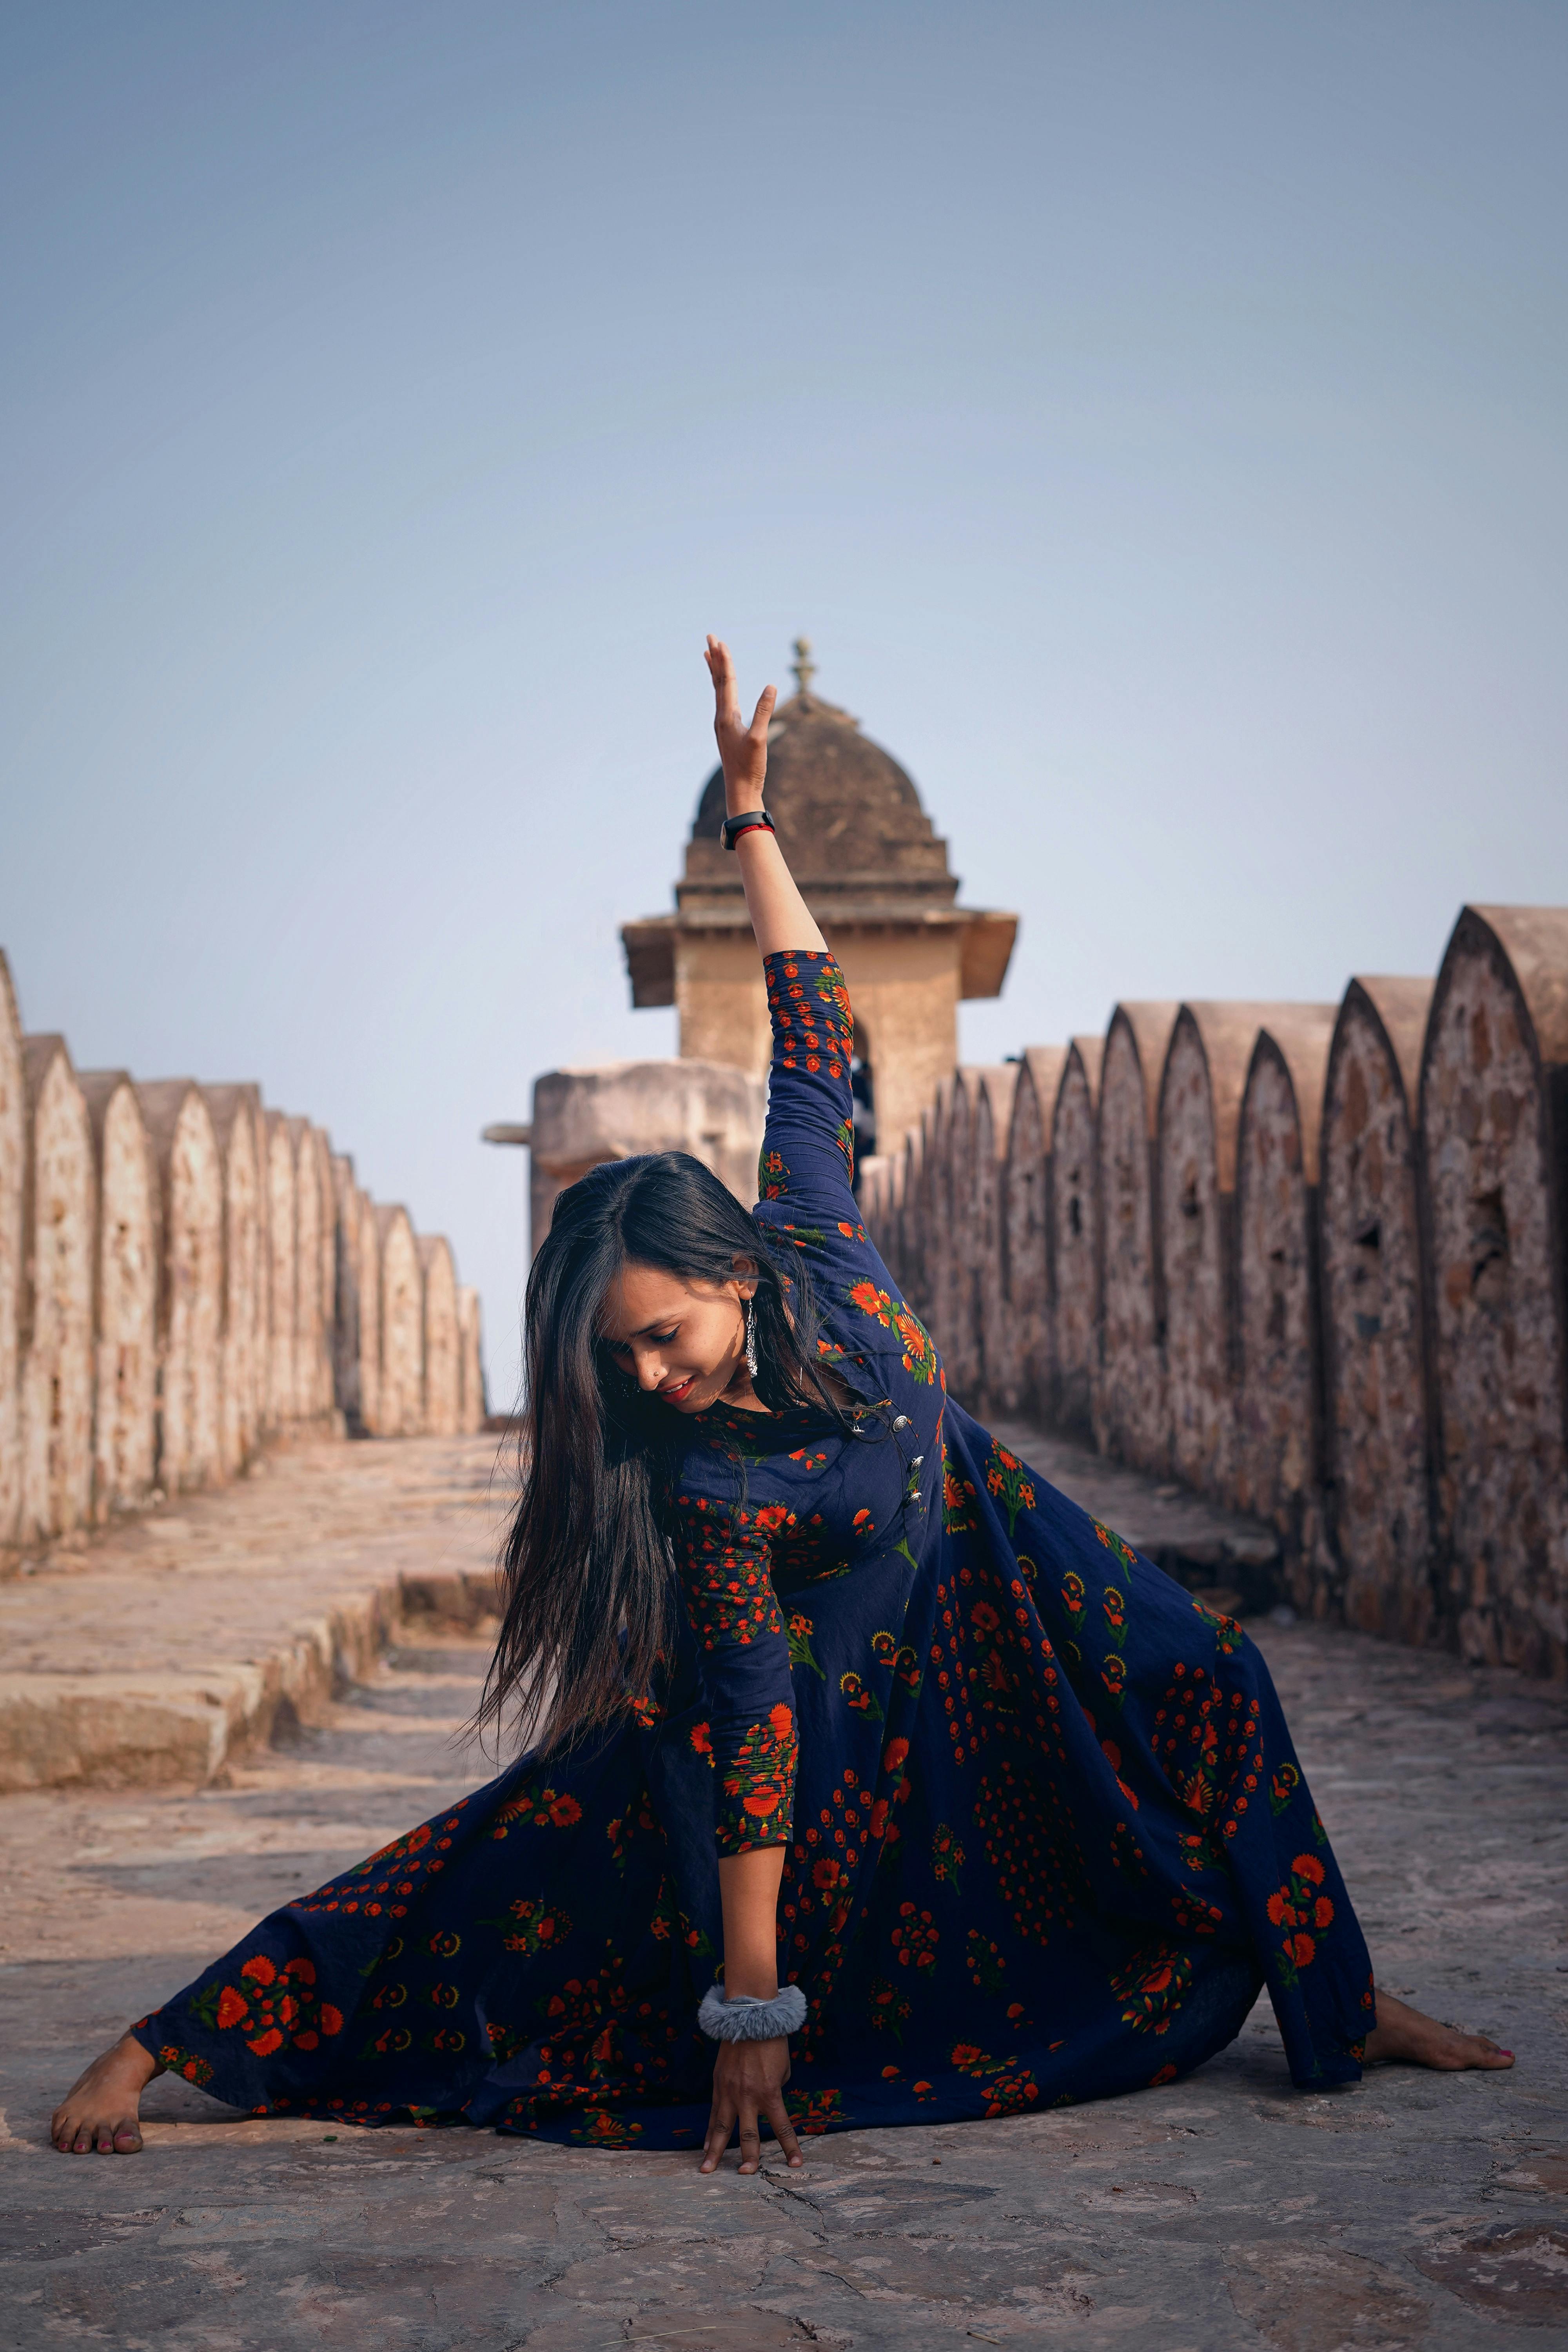 Woman Sari Fashion - Free photo on Pixabay - Pixabay